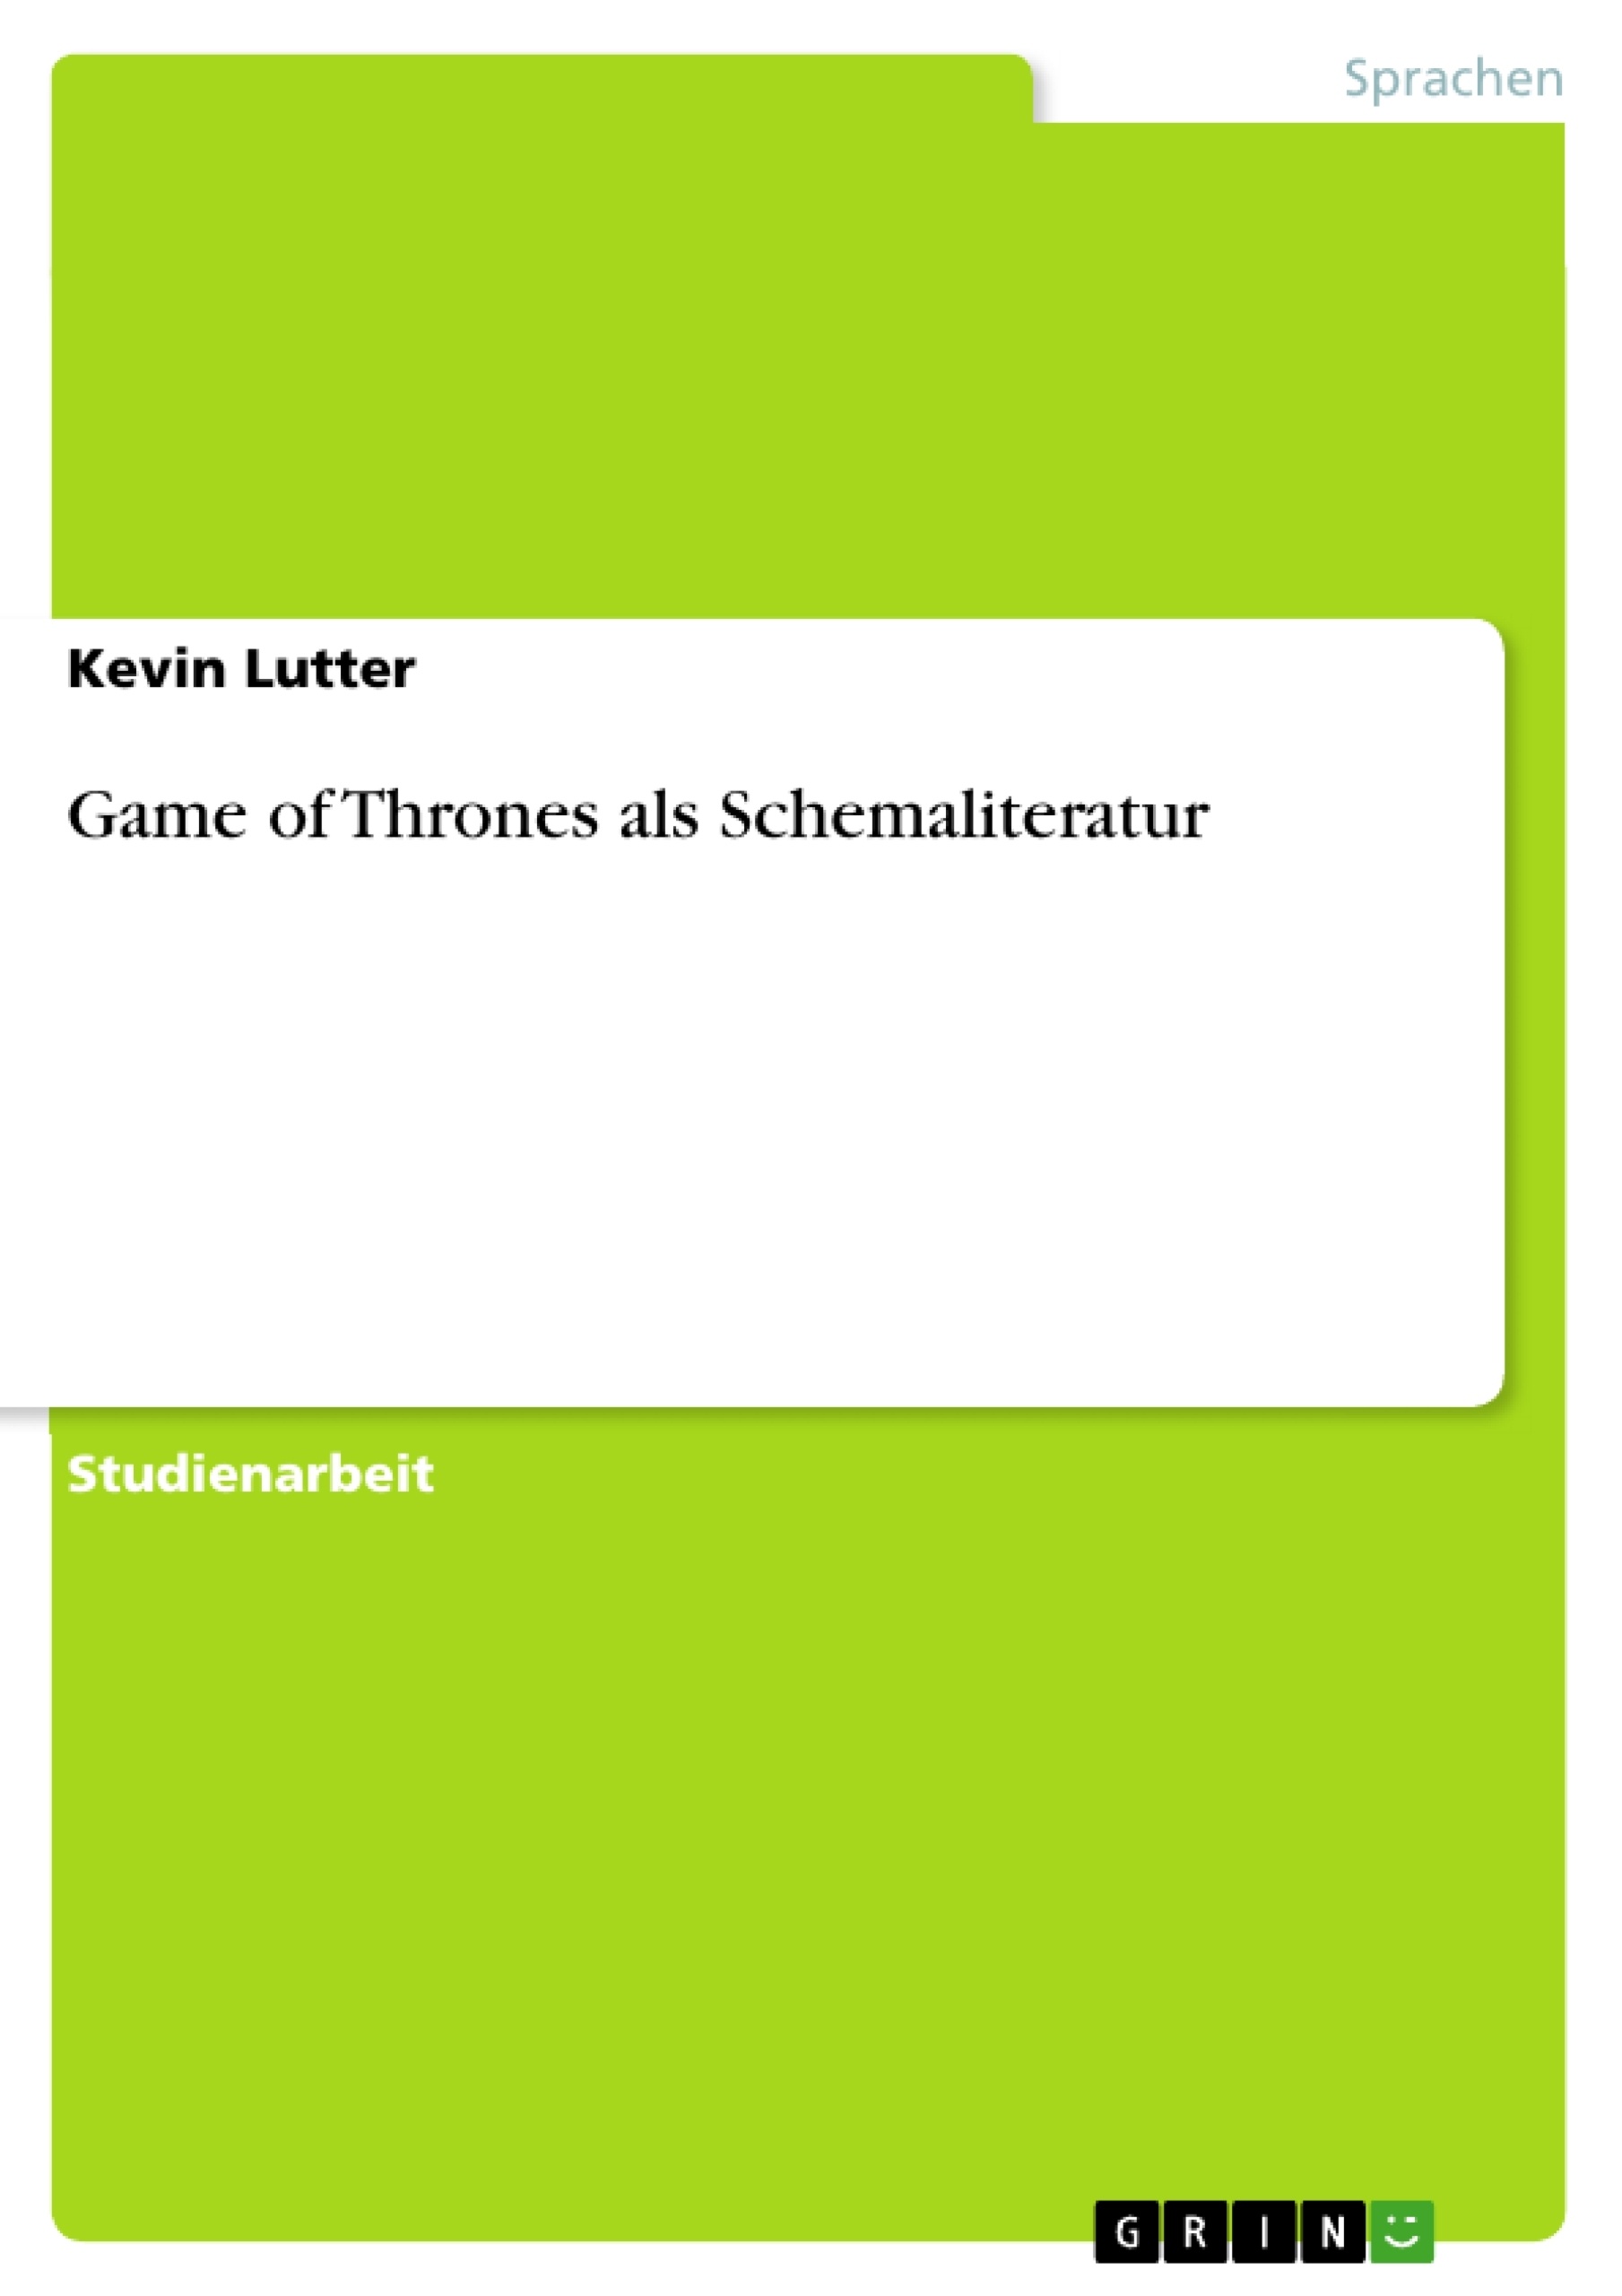 Título: Game of Thrones als Schemaliteratur